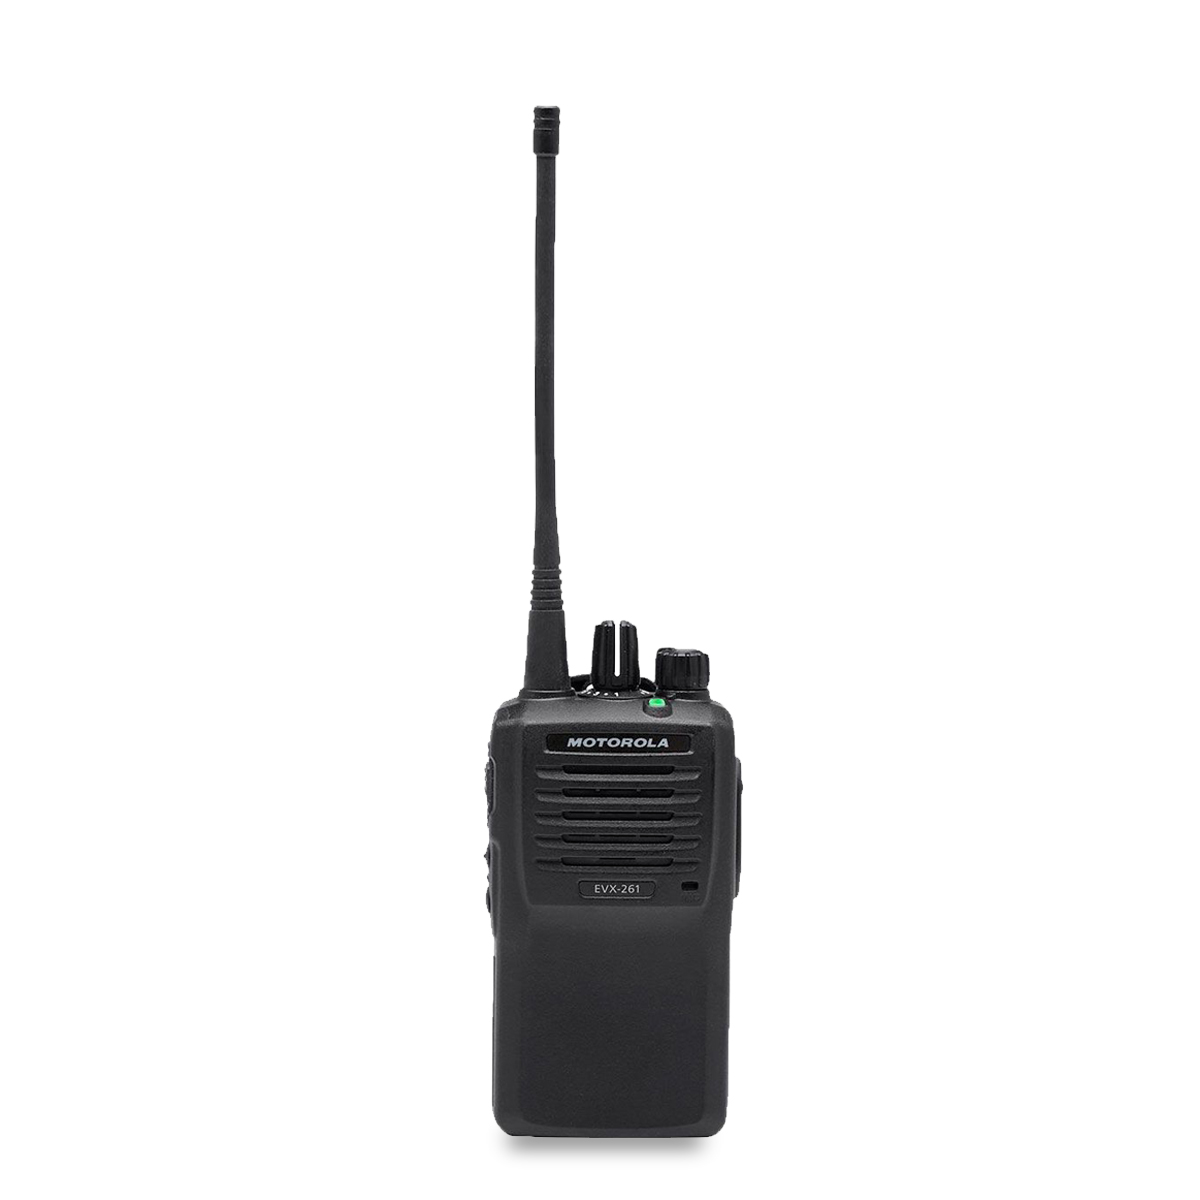 Radio Motorola EVX-261 Digital EVX-261-D0 VHF 136-174 MHz